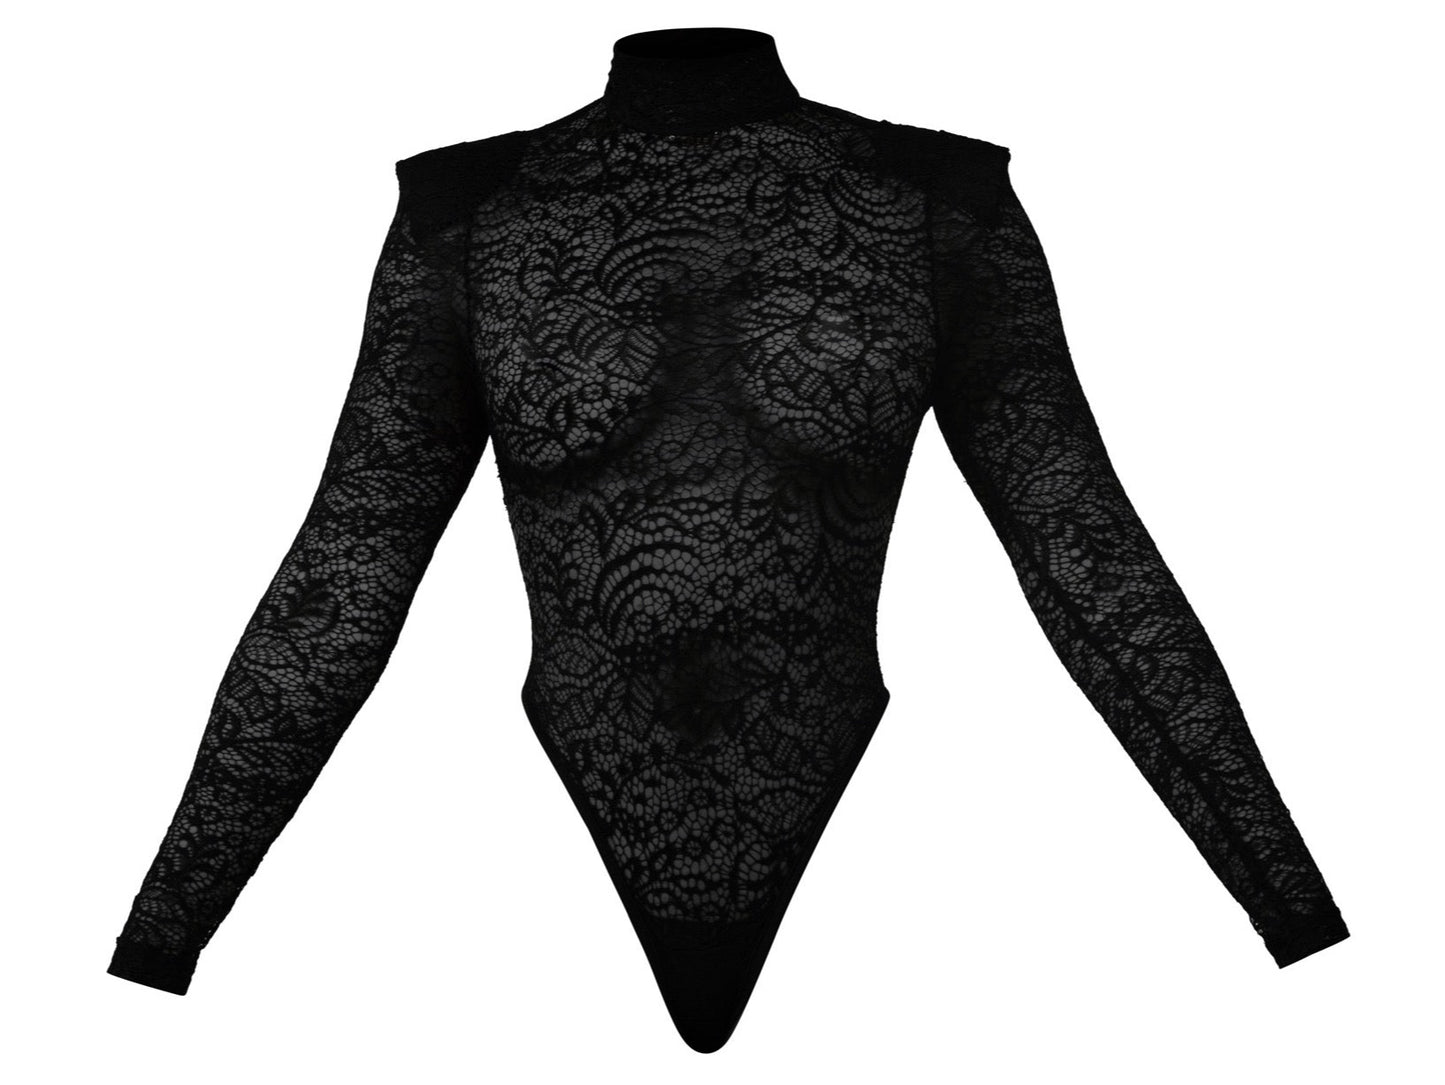 Luxury Kitty Black Lace Bodysuit